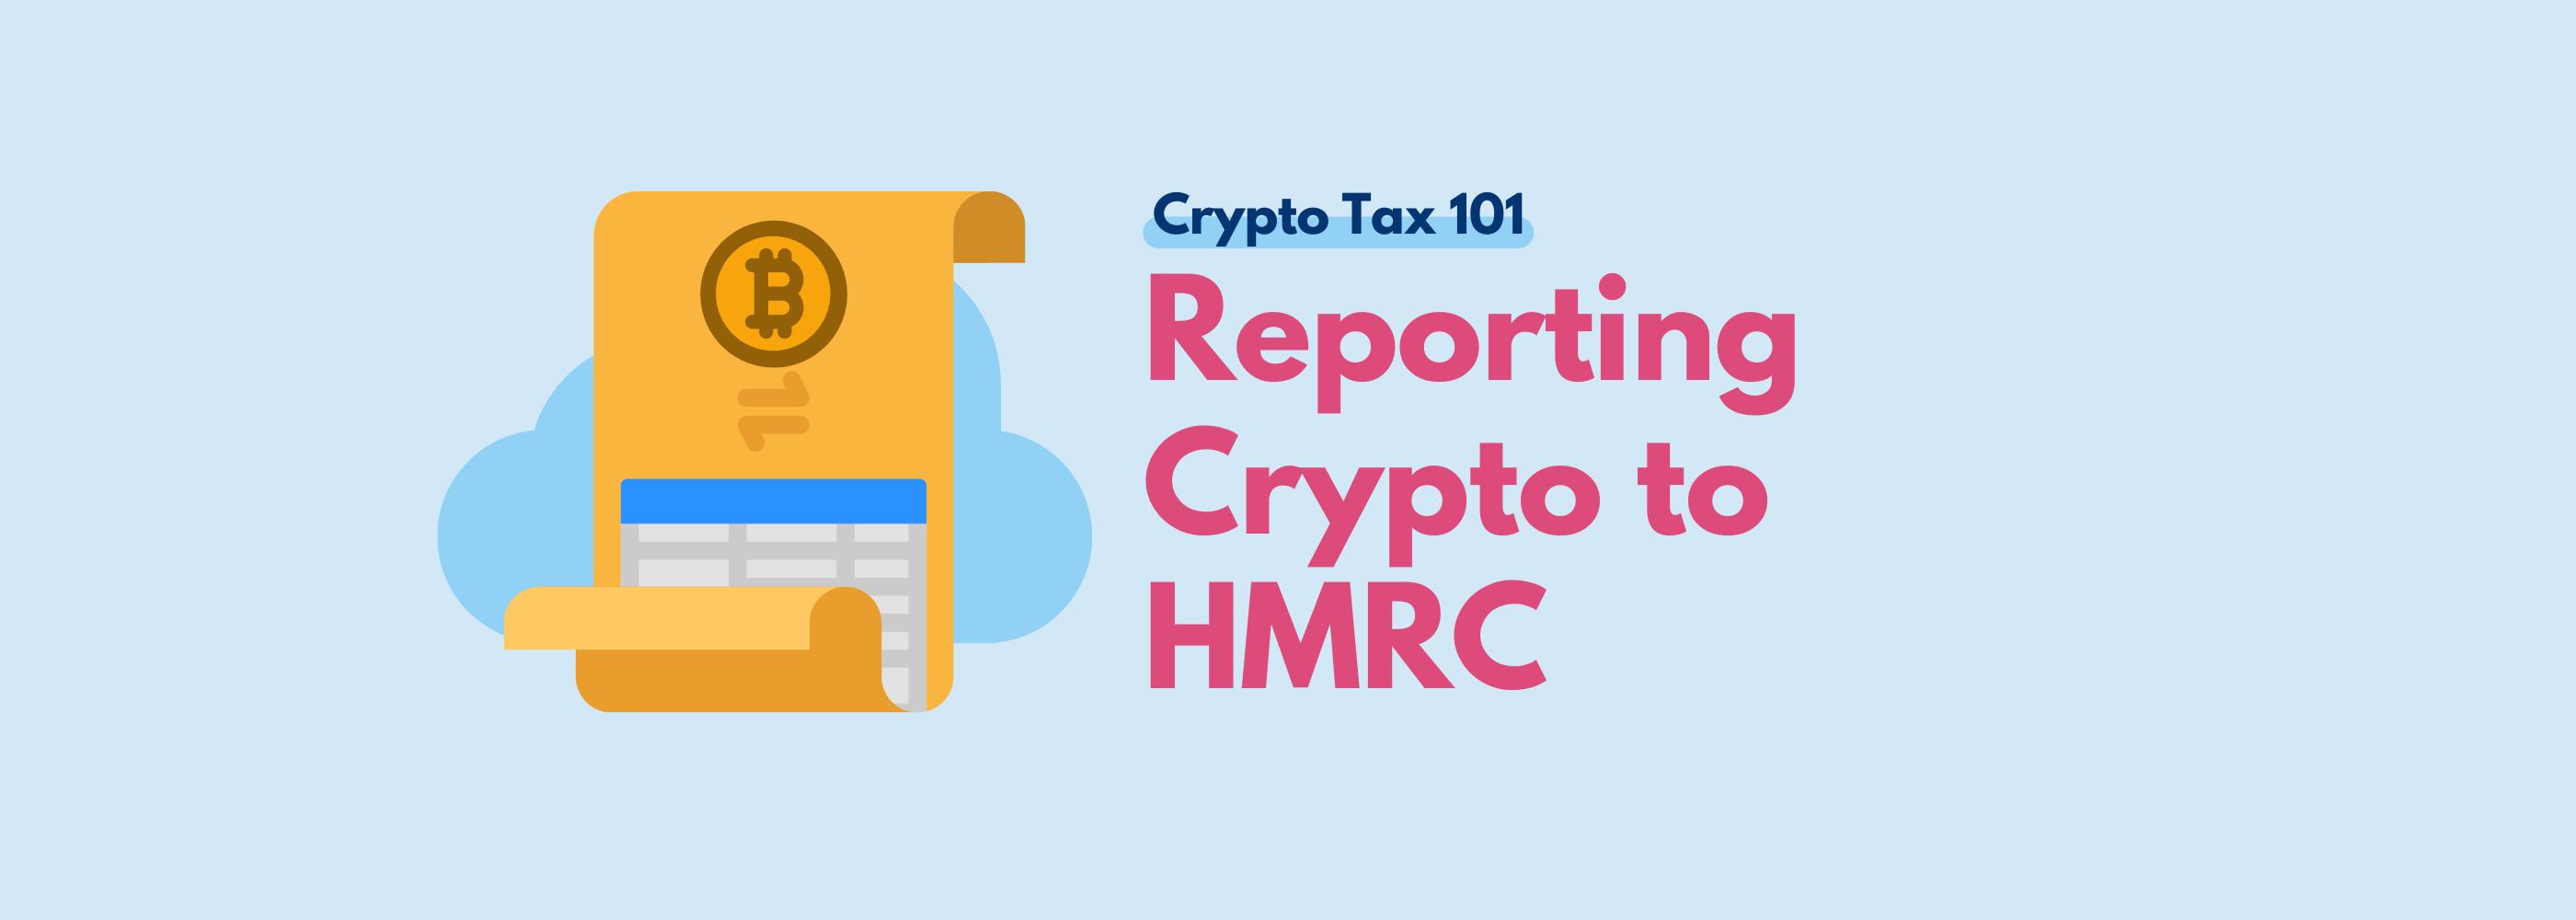 Koinly explains how to report crypto to HMRC